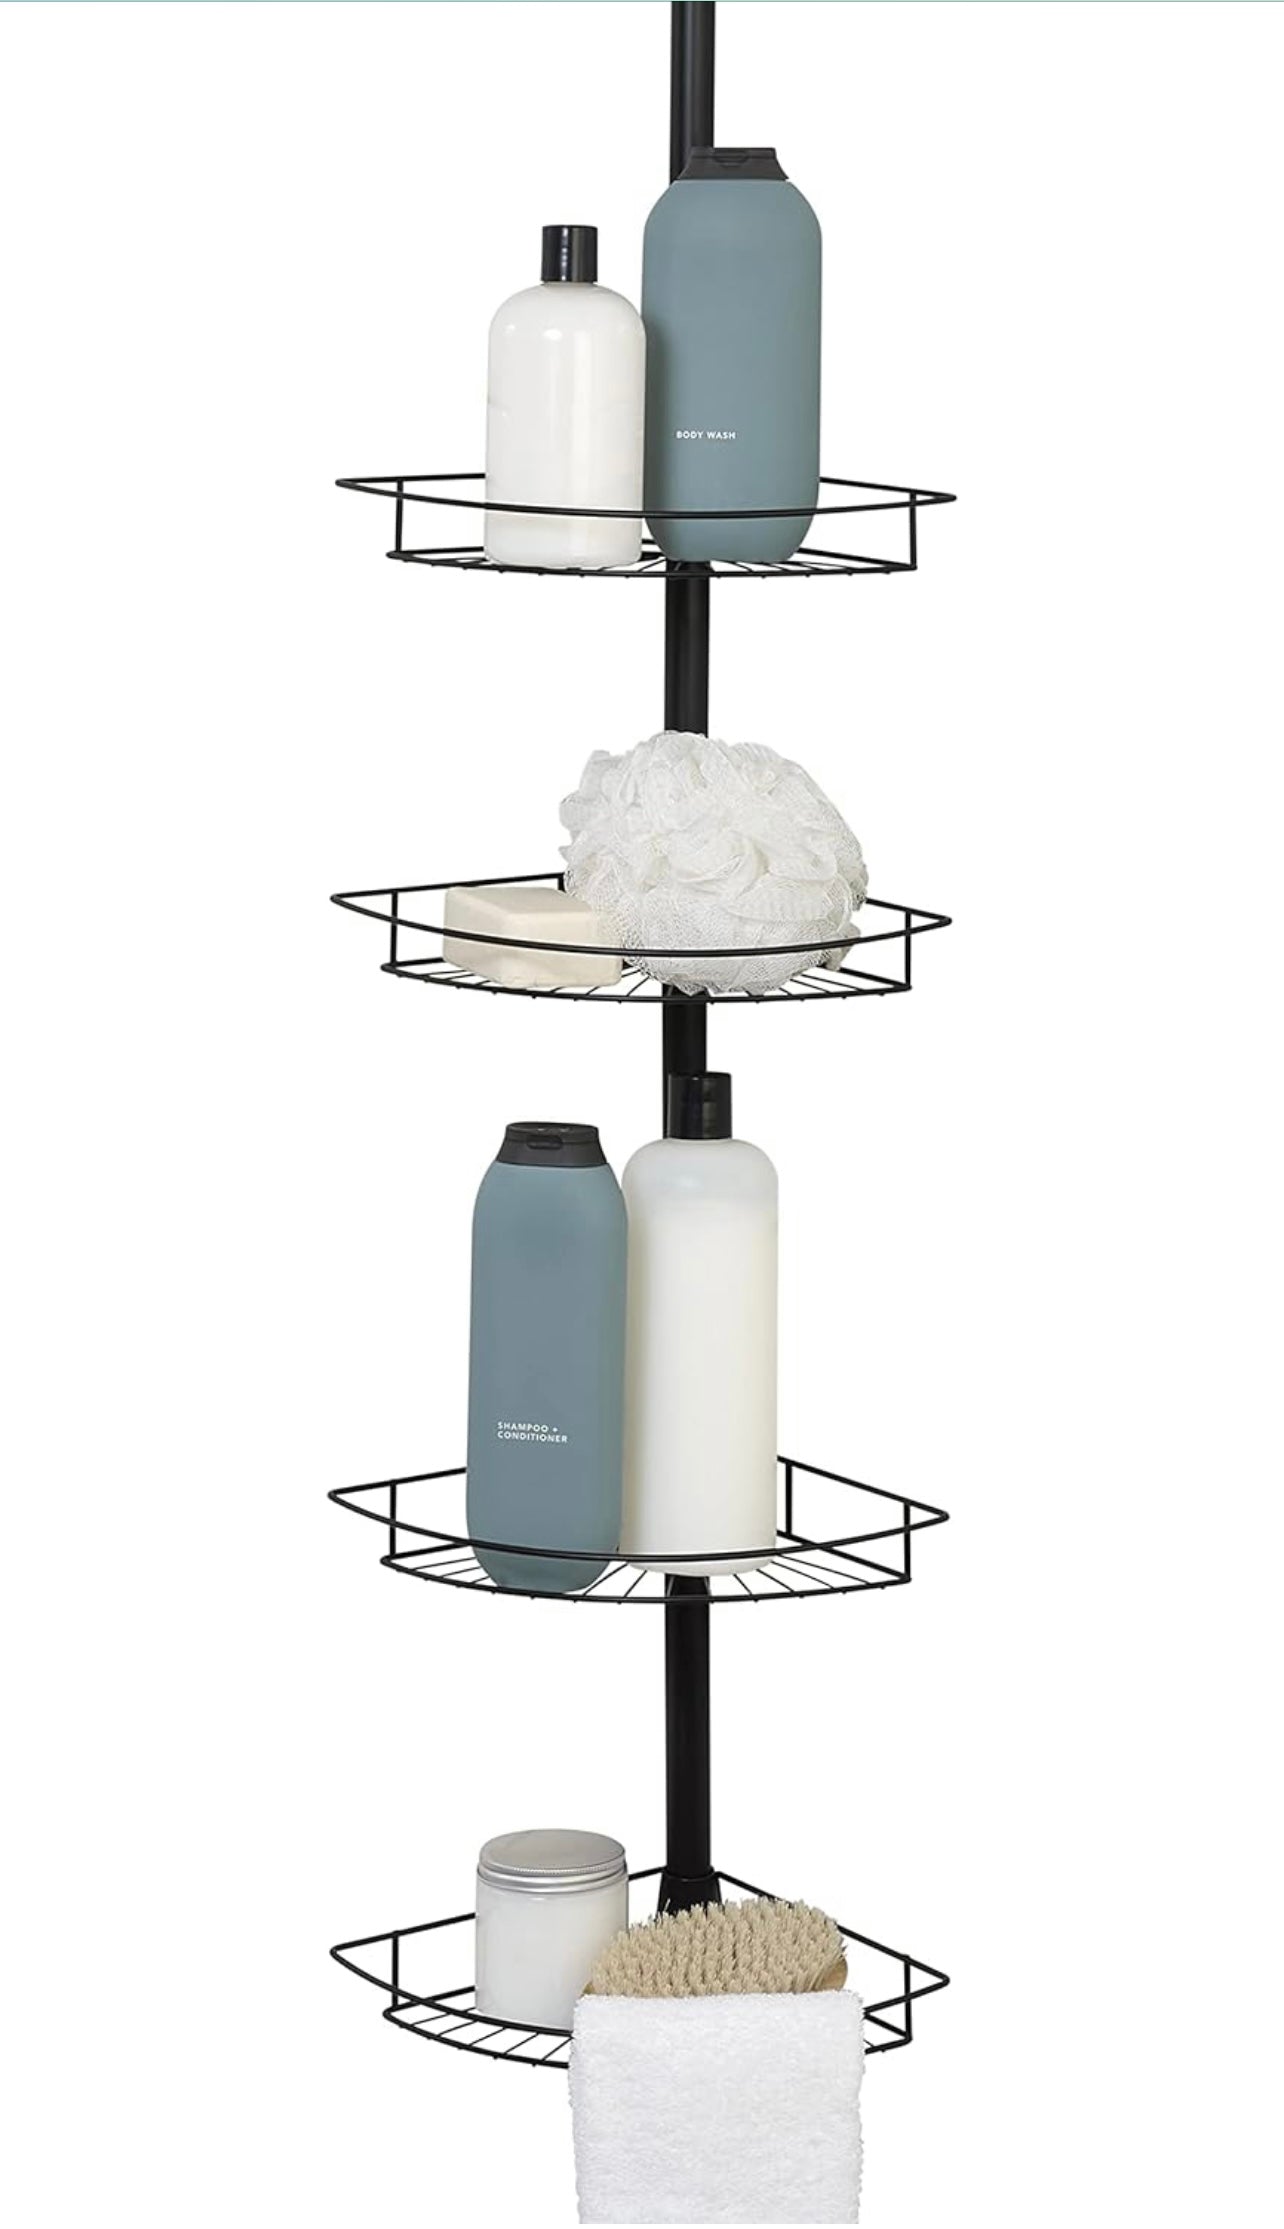 Zenna Home Tension Pole Shower Caddy, 4 Basket Shelves with Built-In Towel Bars, Adjustable, 60 to 97 Inch, Matte Black